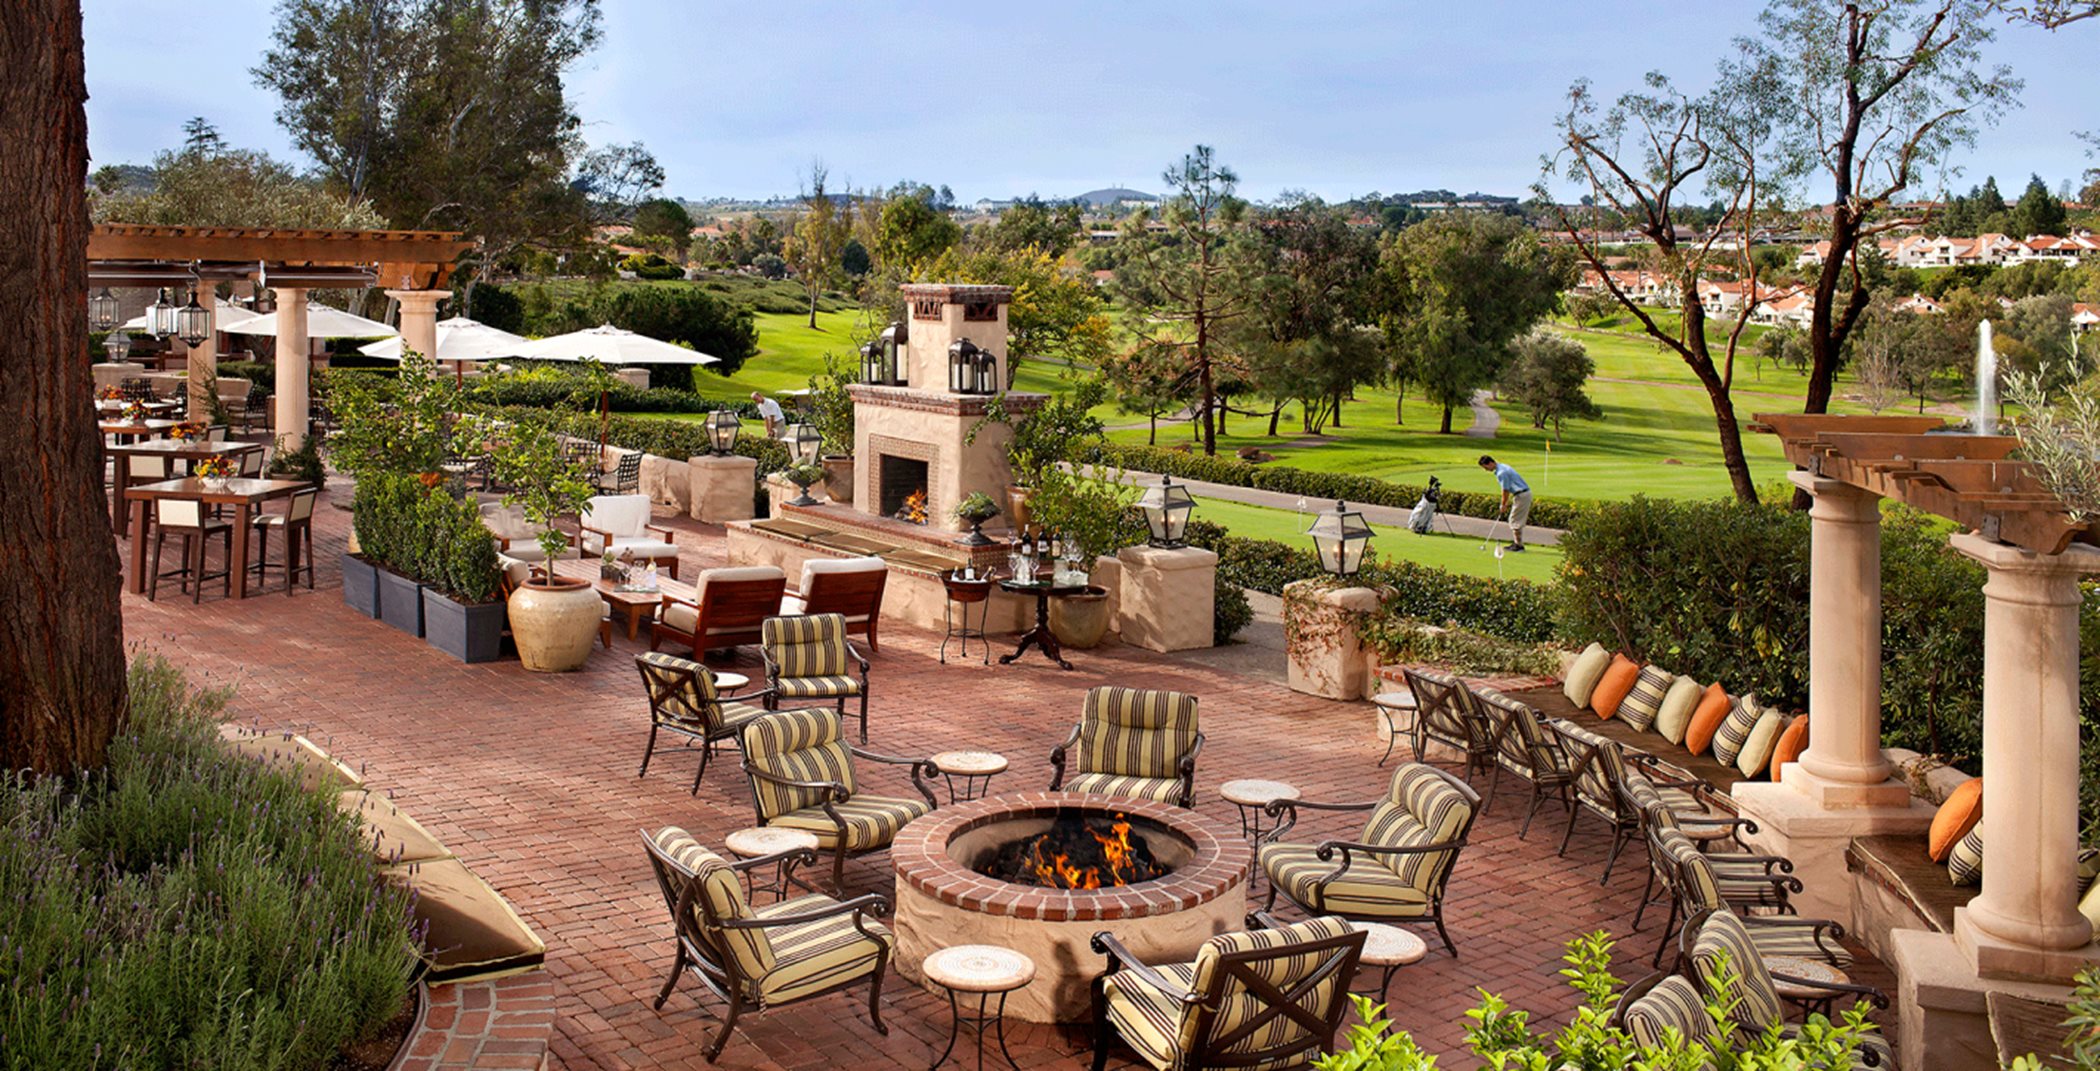 Rancho Bernardo Inn outdoor seating area with fire pit